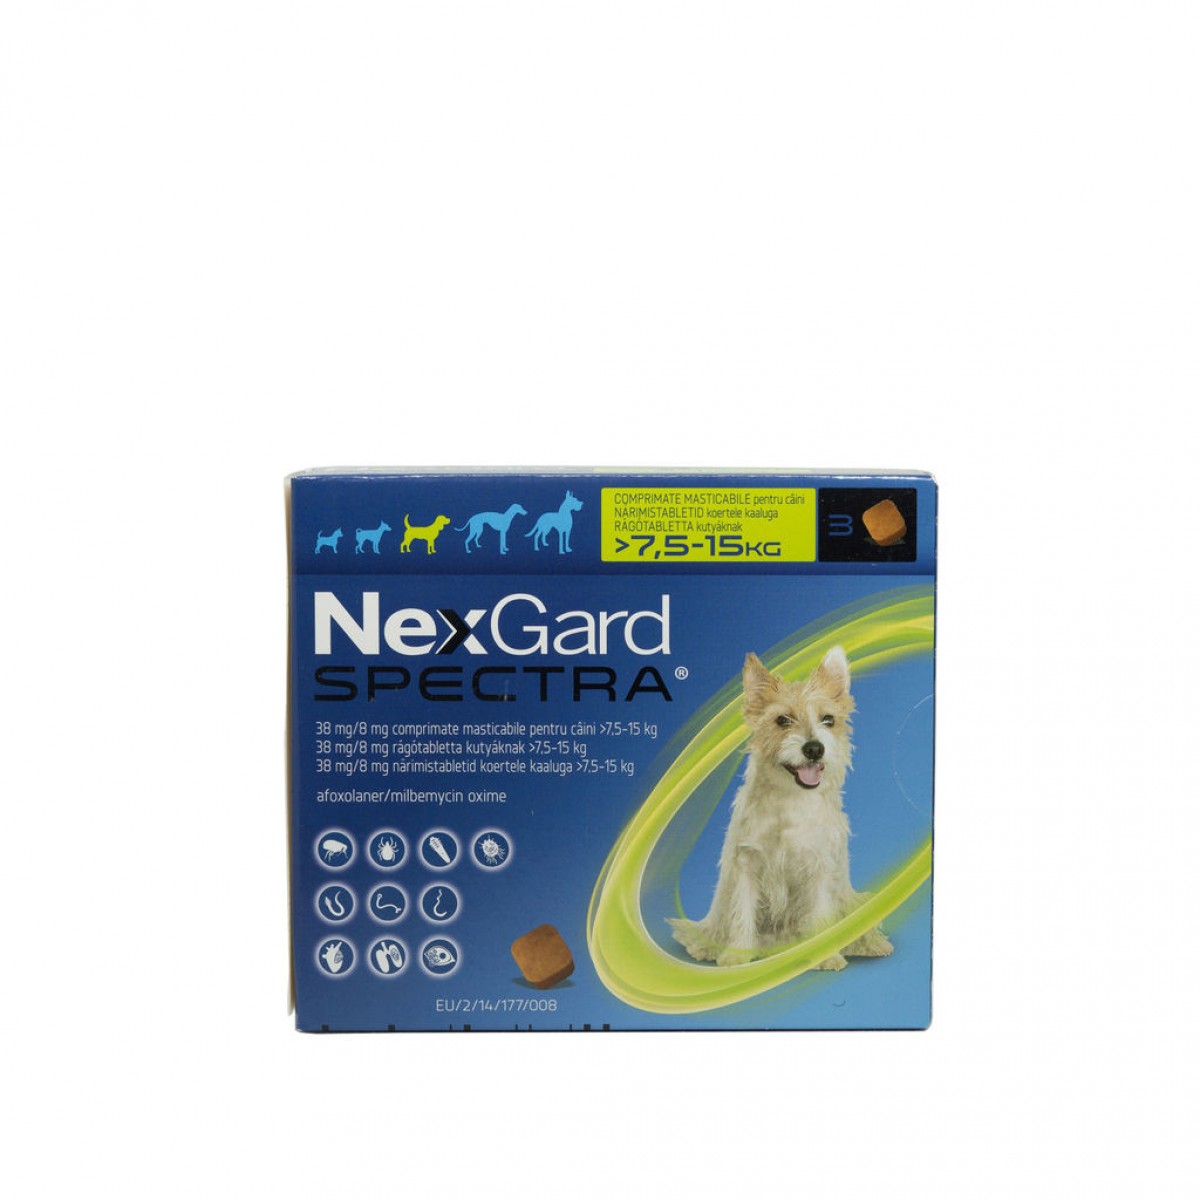 Nexgard Spectra Caini M - (7.5-15kg), 3 comprimate masticabile, Antiparazitare externe, Antiparazitare, Câini 